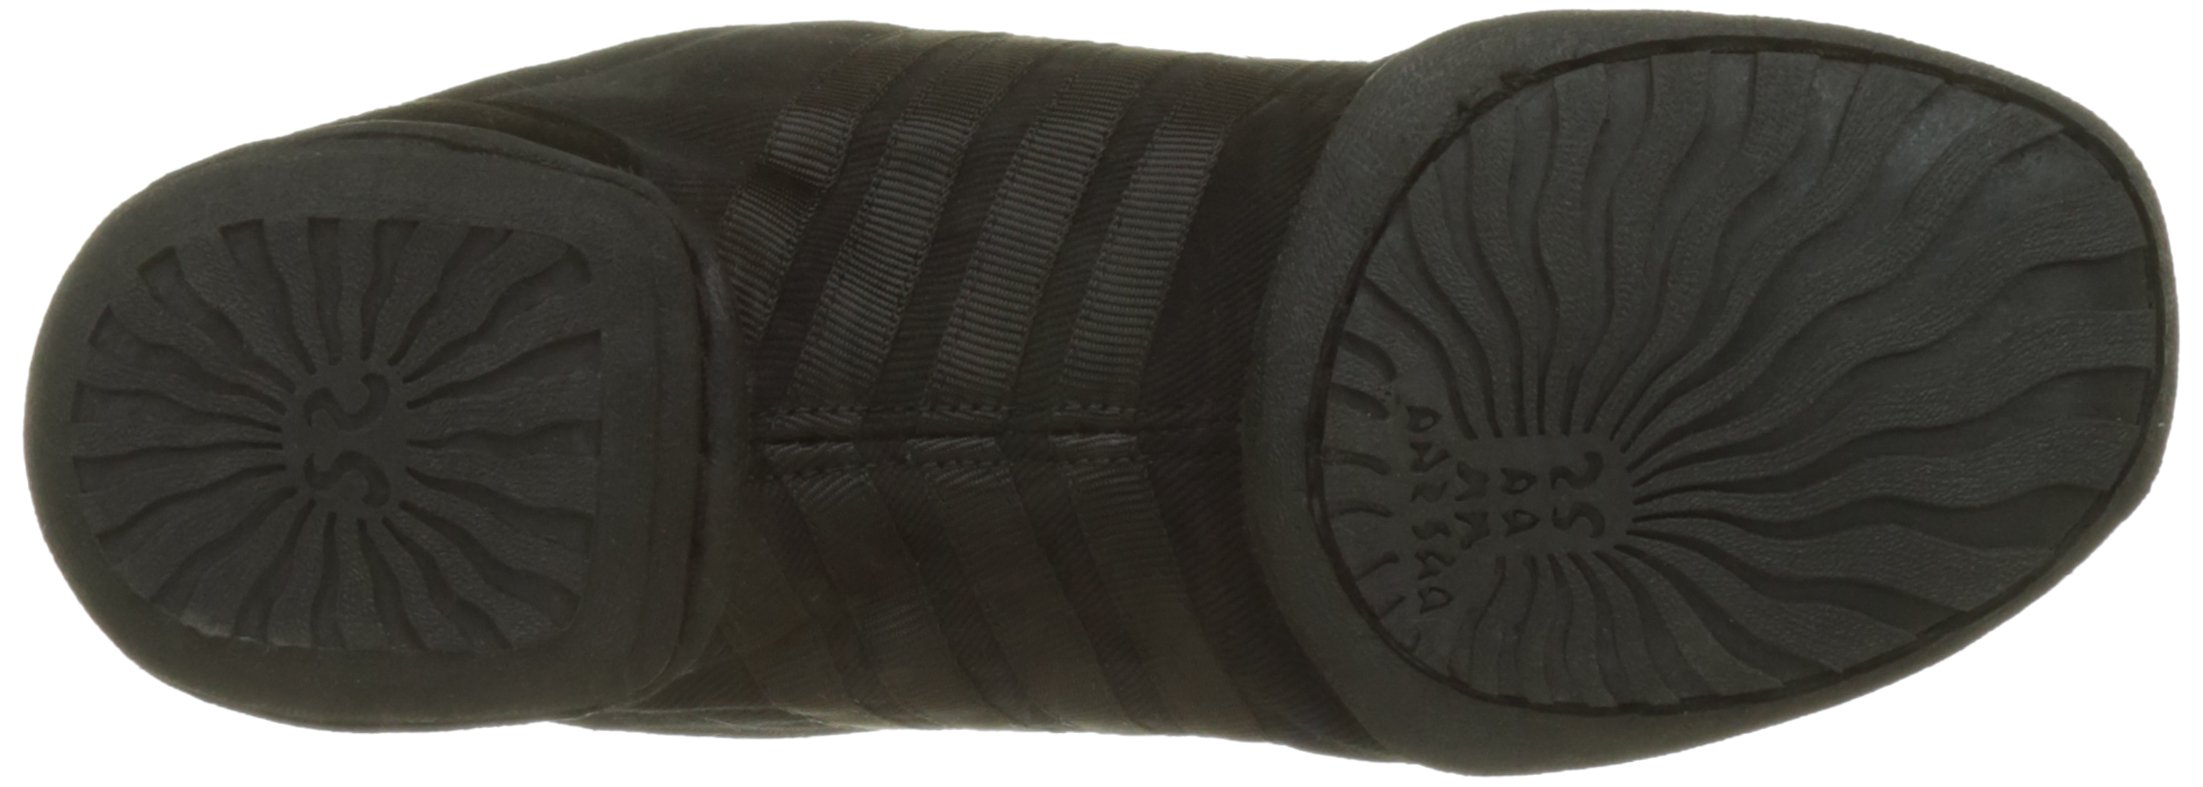 Sansha Men's Skazz Low Top Sneakers S37C DYNA-STIE, Black, 16.5 M US